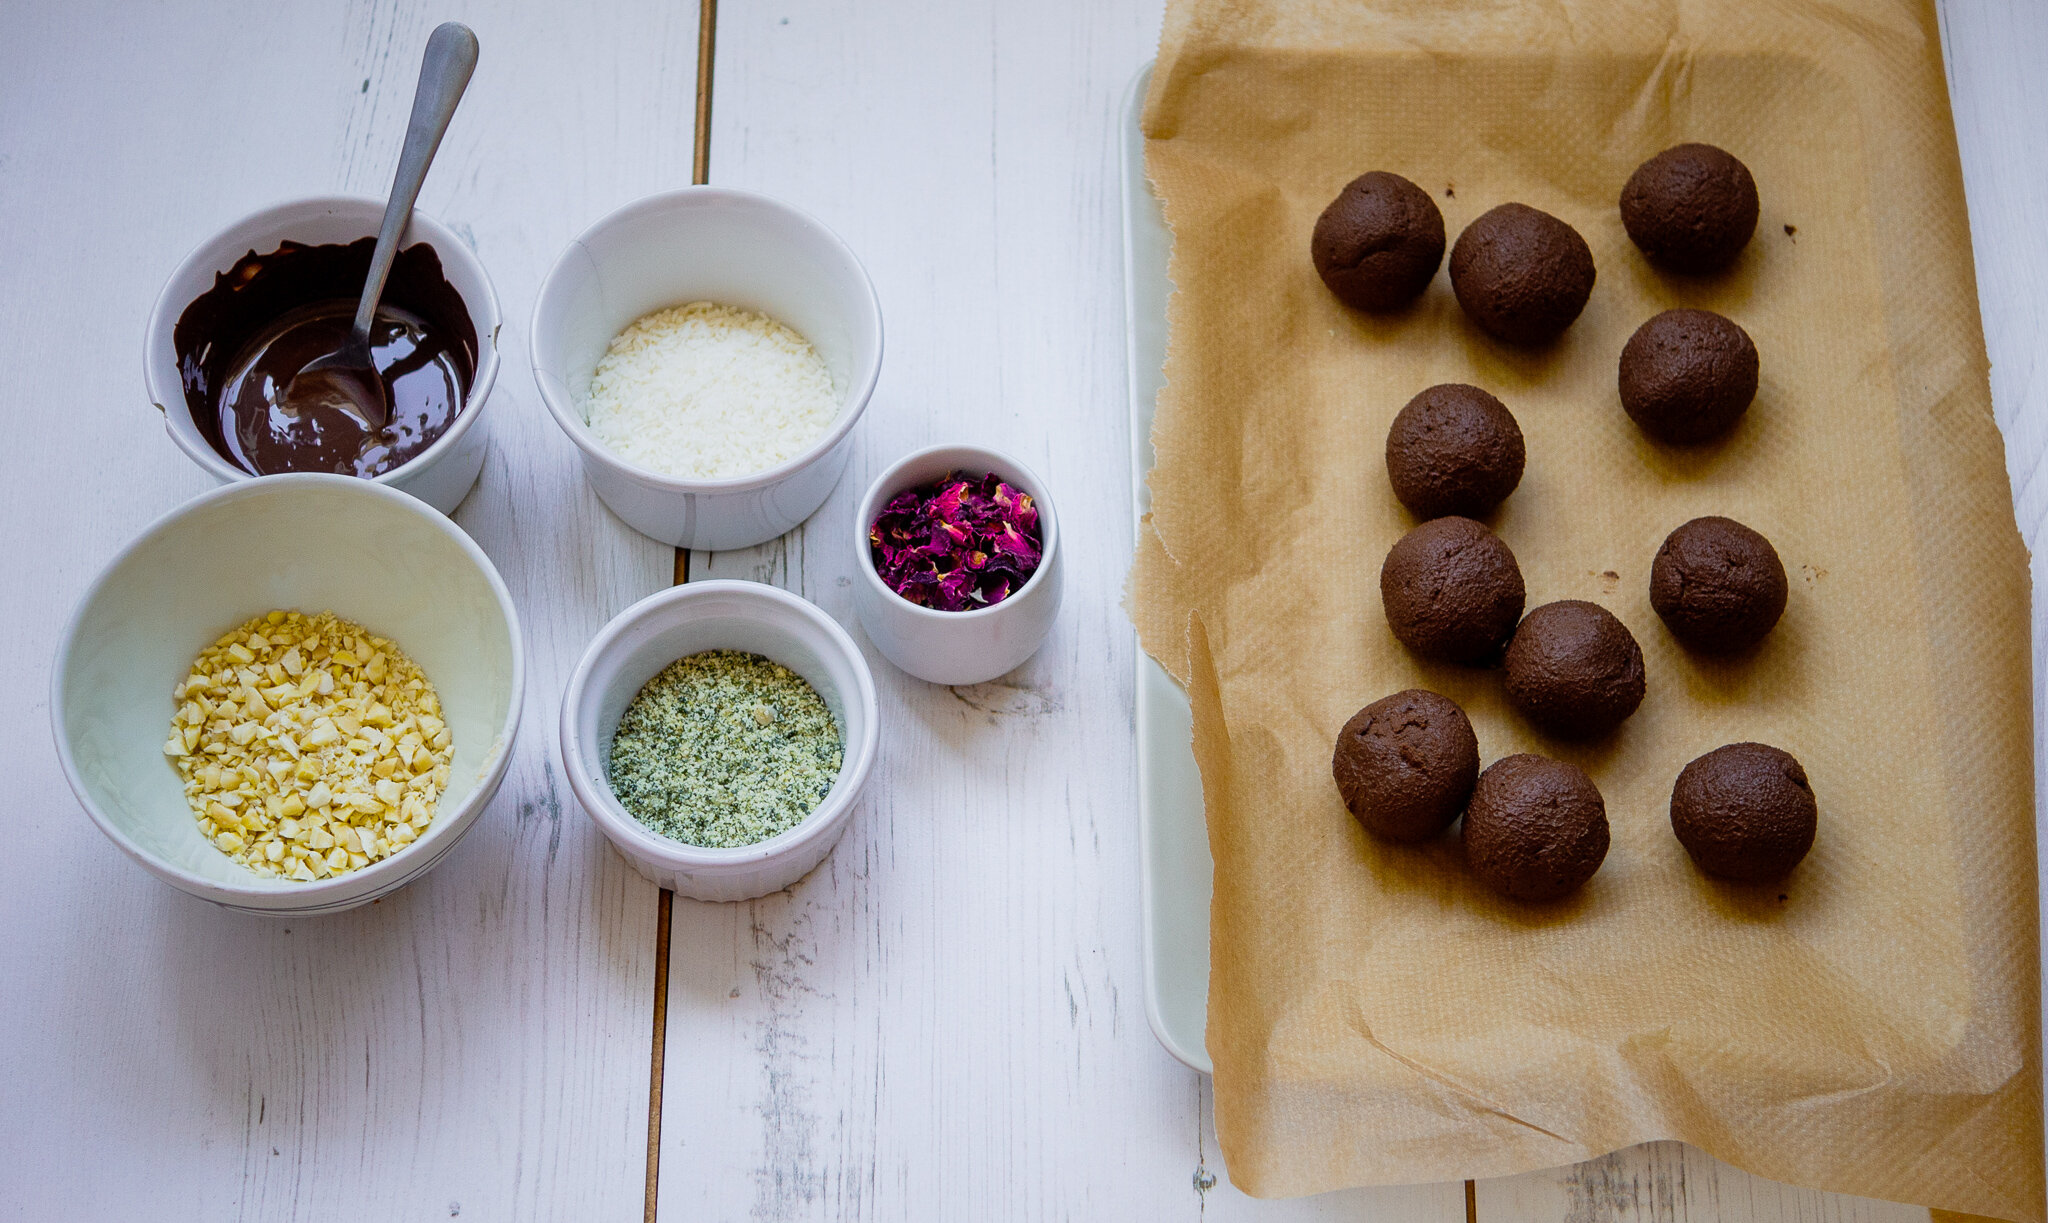 chocolate truffles recipes uk  by kam sokhi allergy chef 